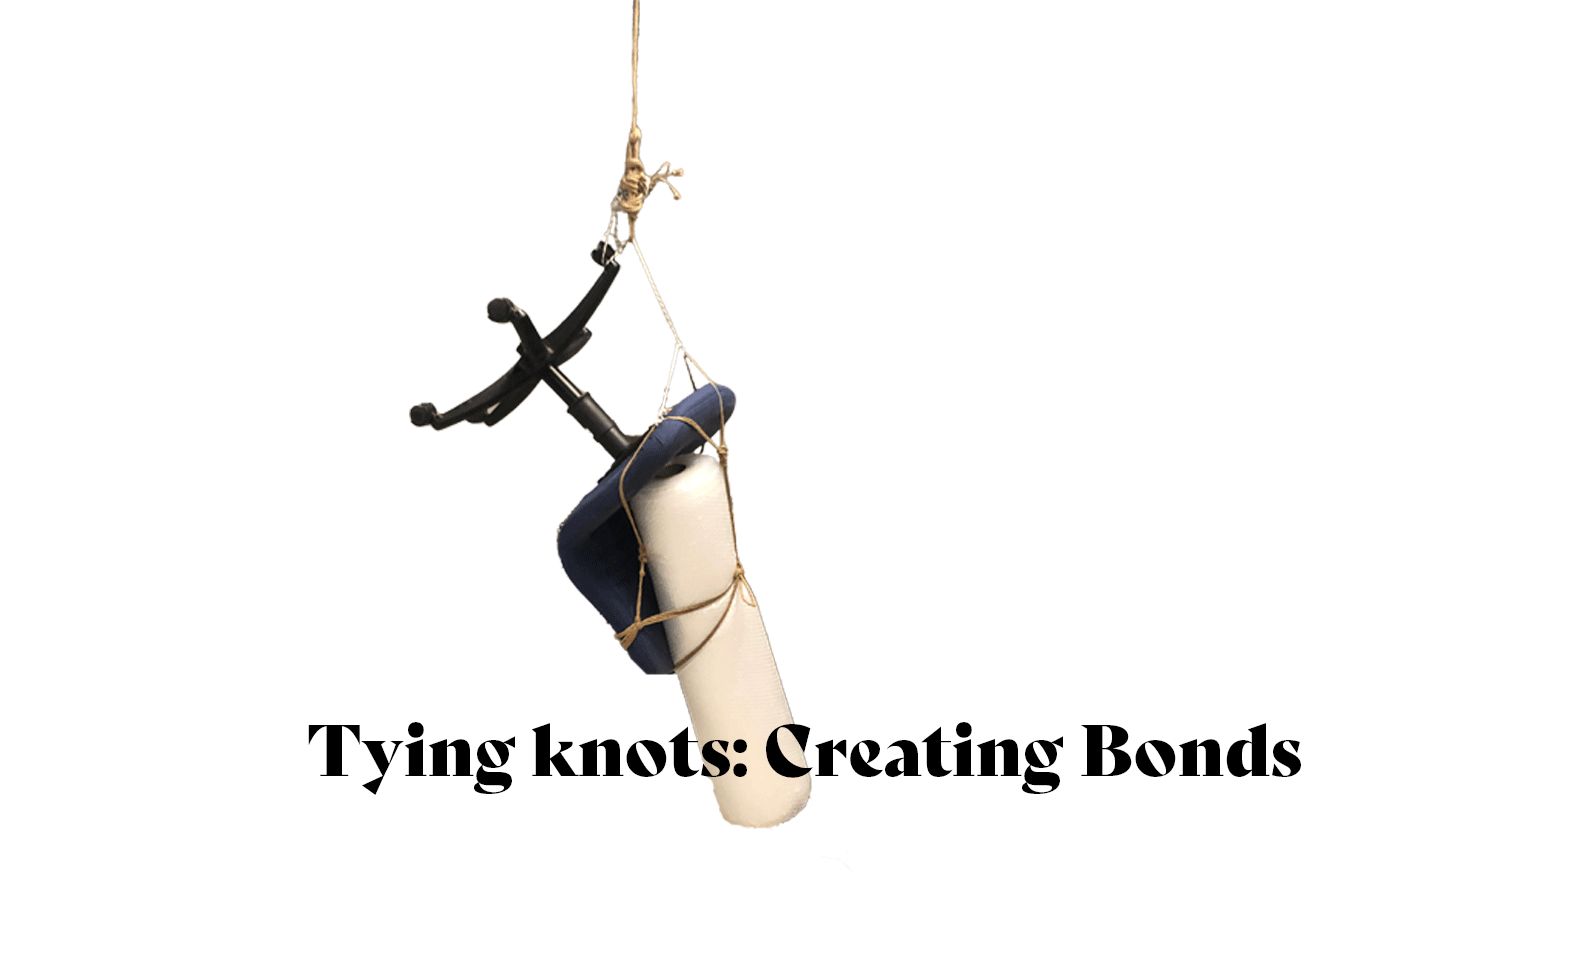 Tying-Knots: Creating-Bonds. Gif credits: Kıvanç Sert